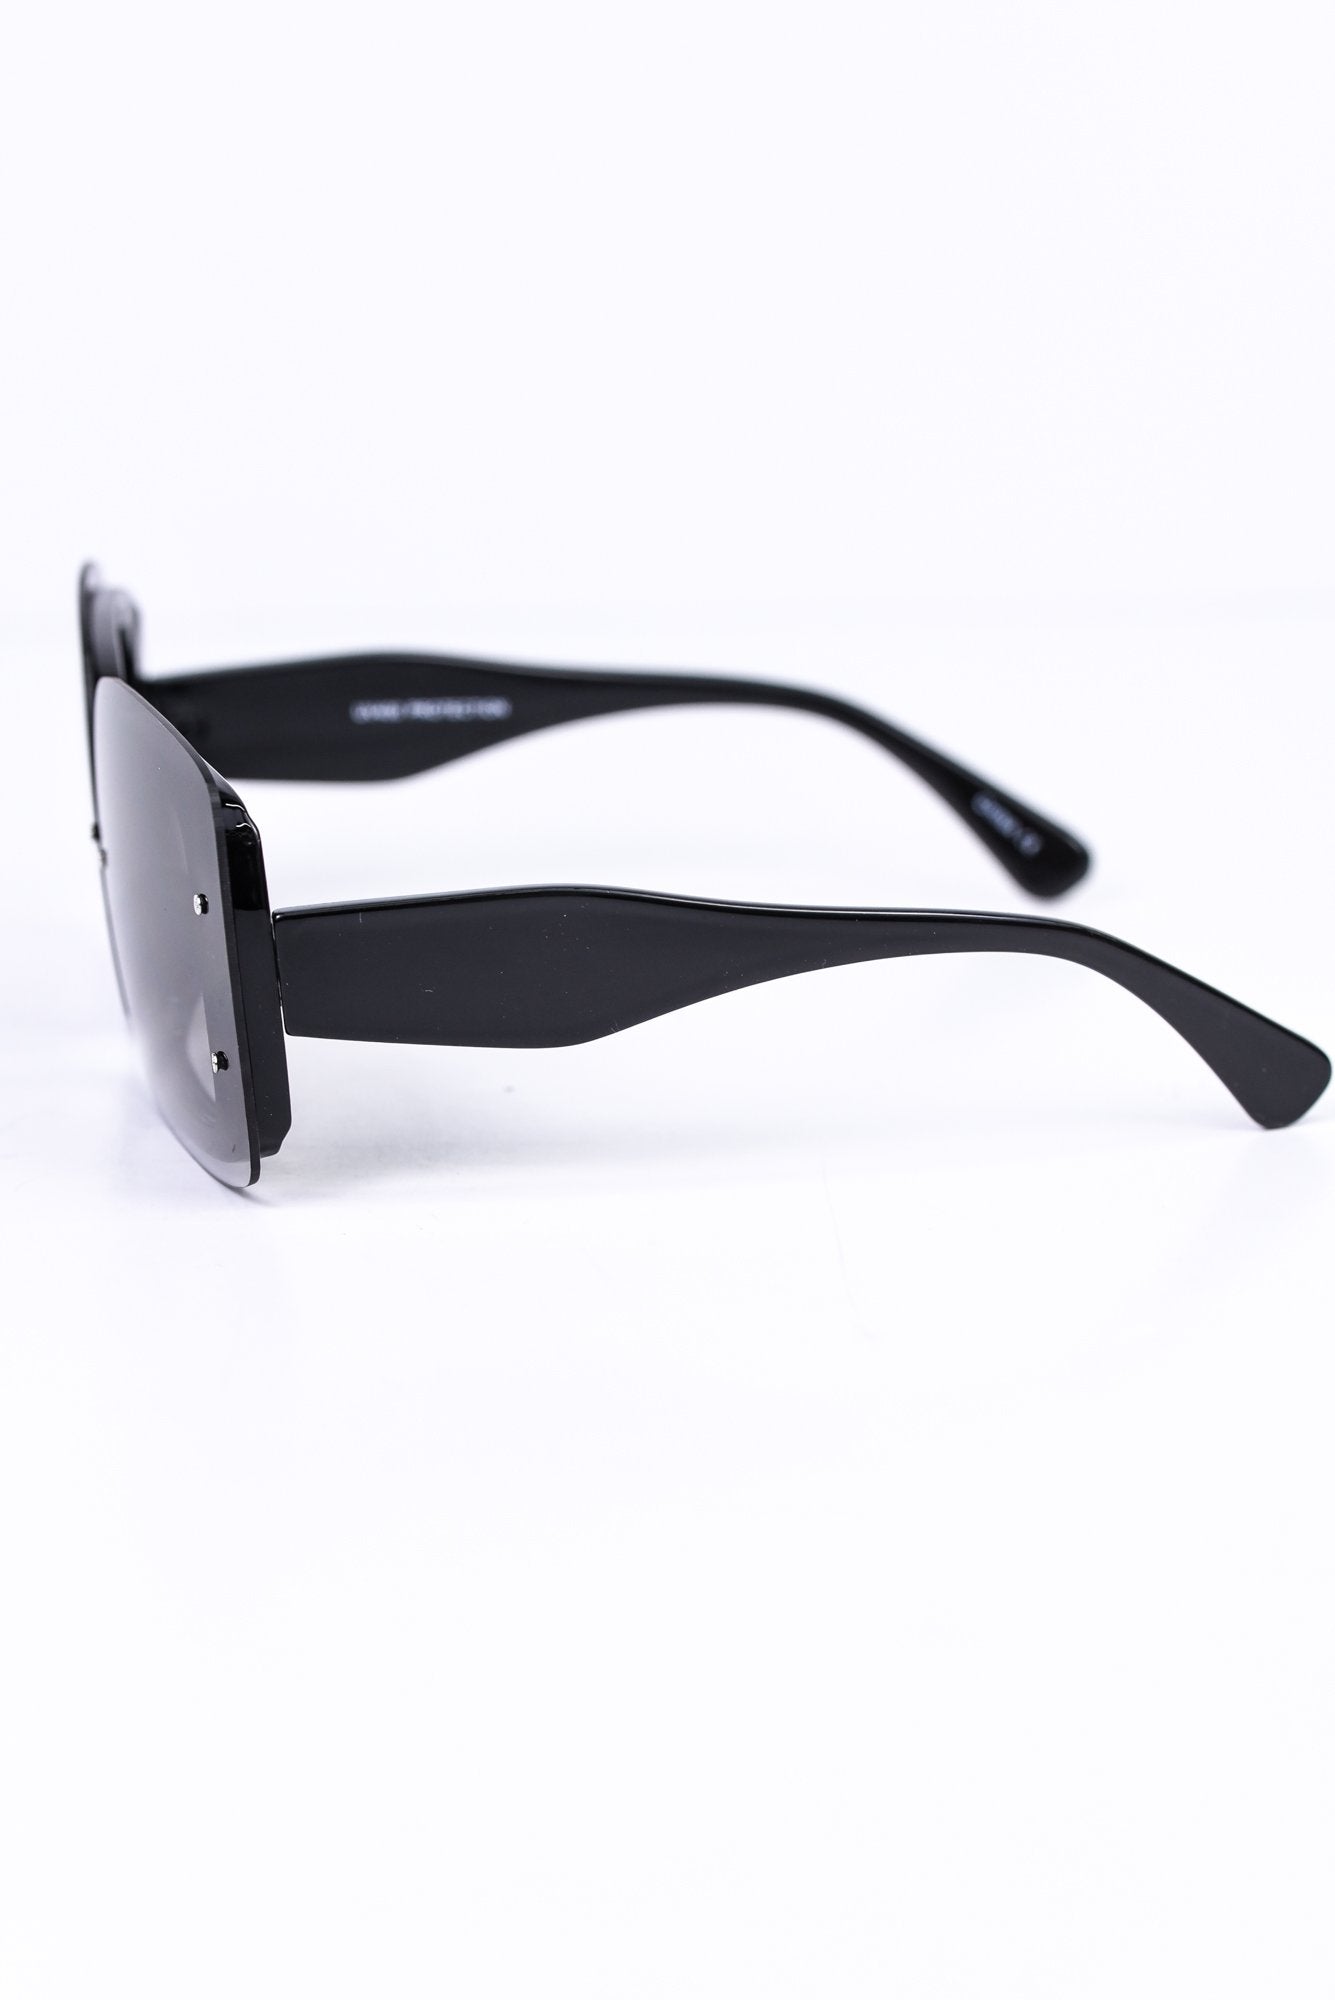 Black/Black Ombre Lens Sunglasses - SGL234BK - FREE hard case